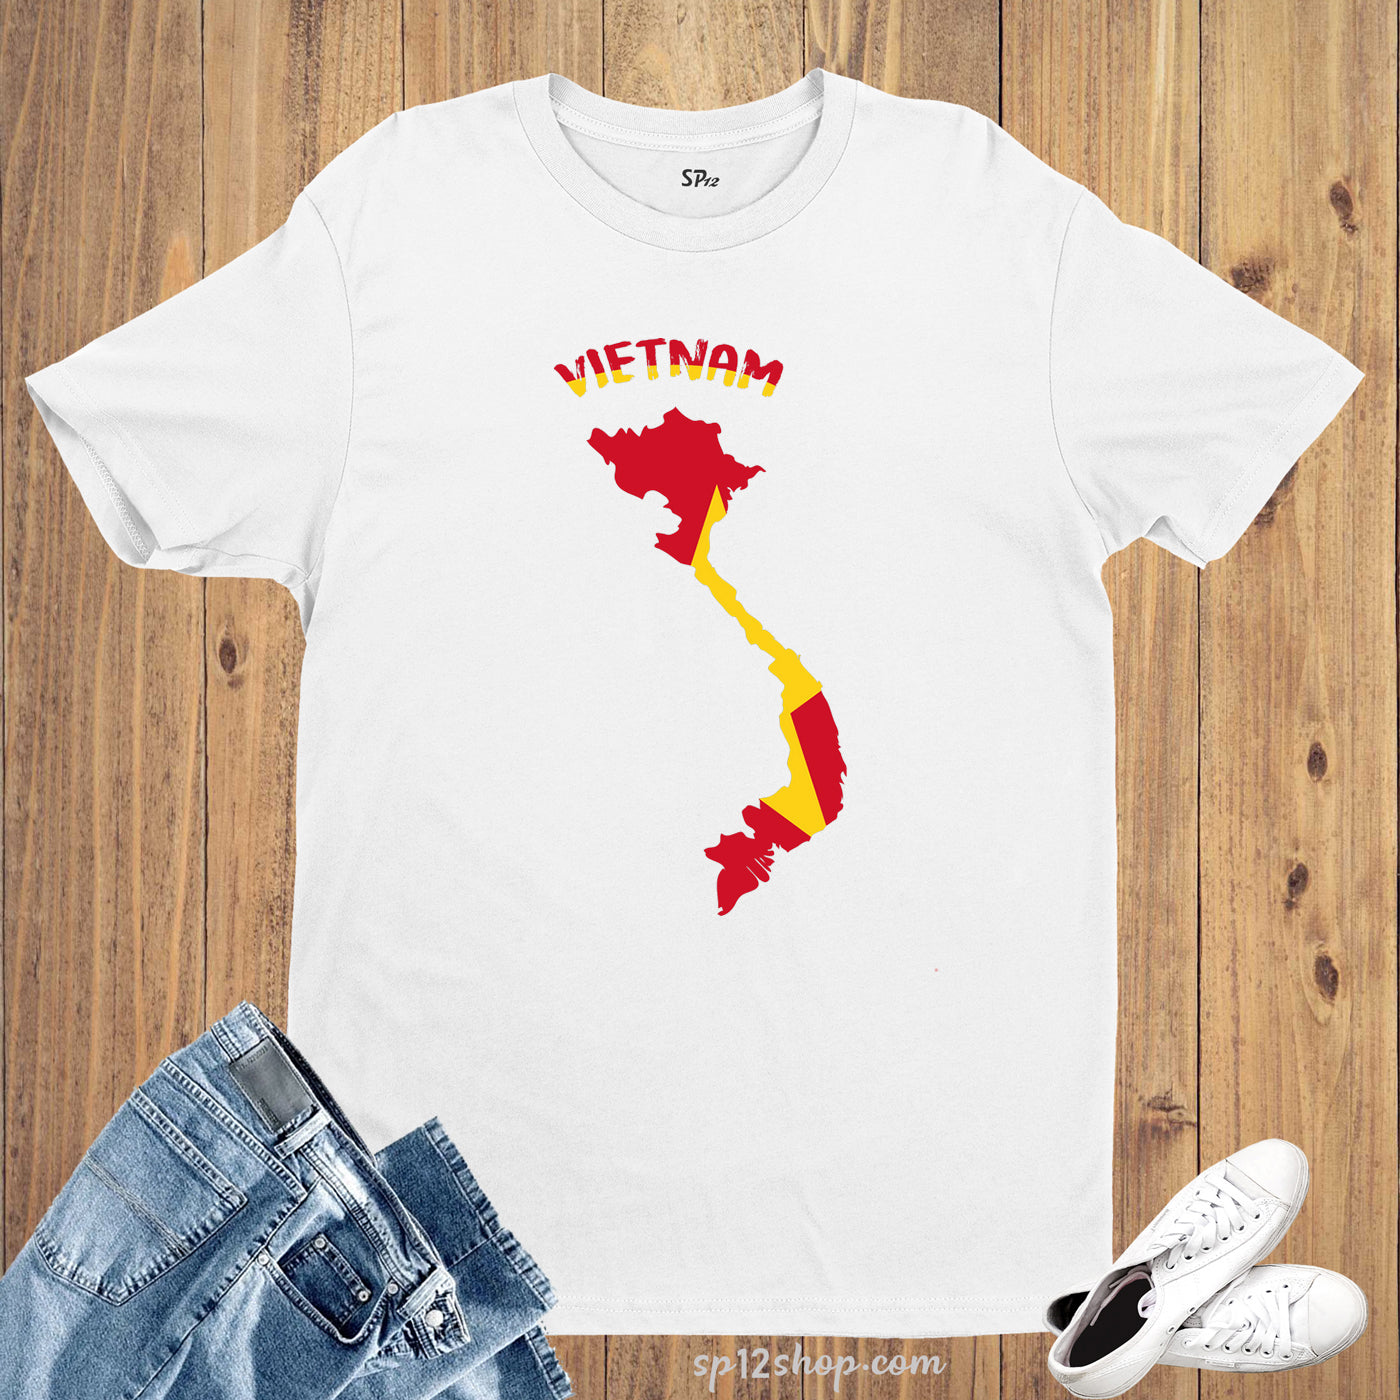 Vietnam Flag T Shirt Olympics FIFA World Cup Country Flag Tee Shirt